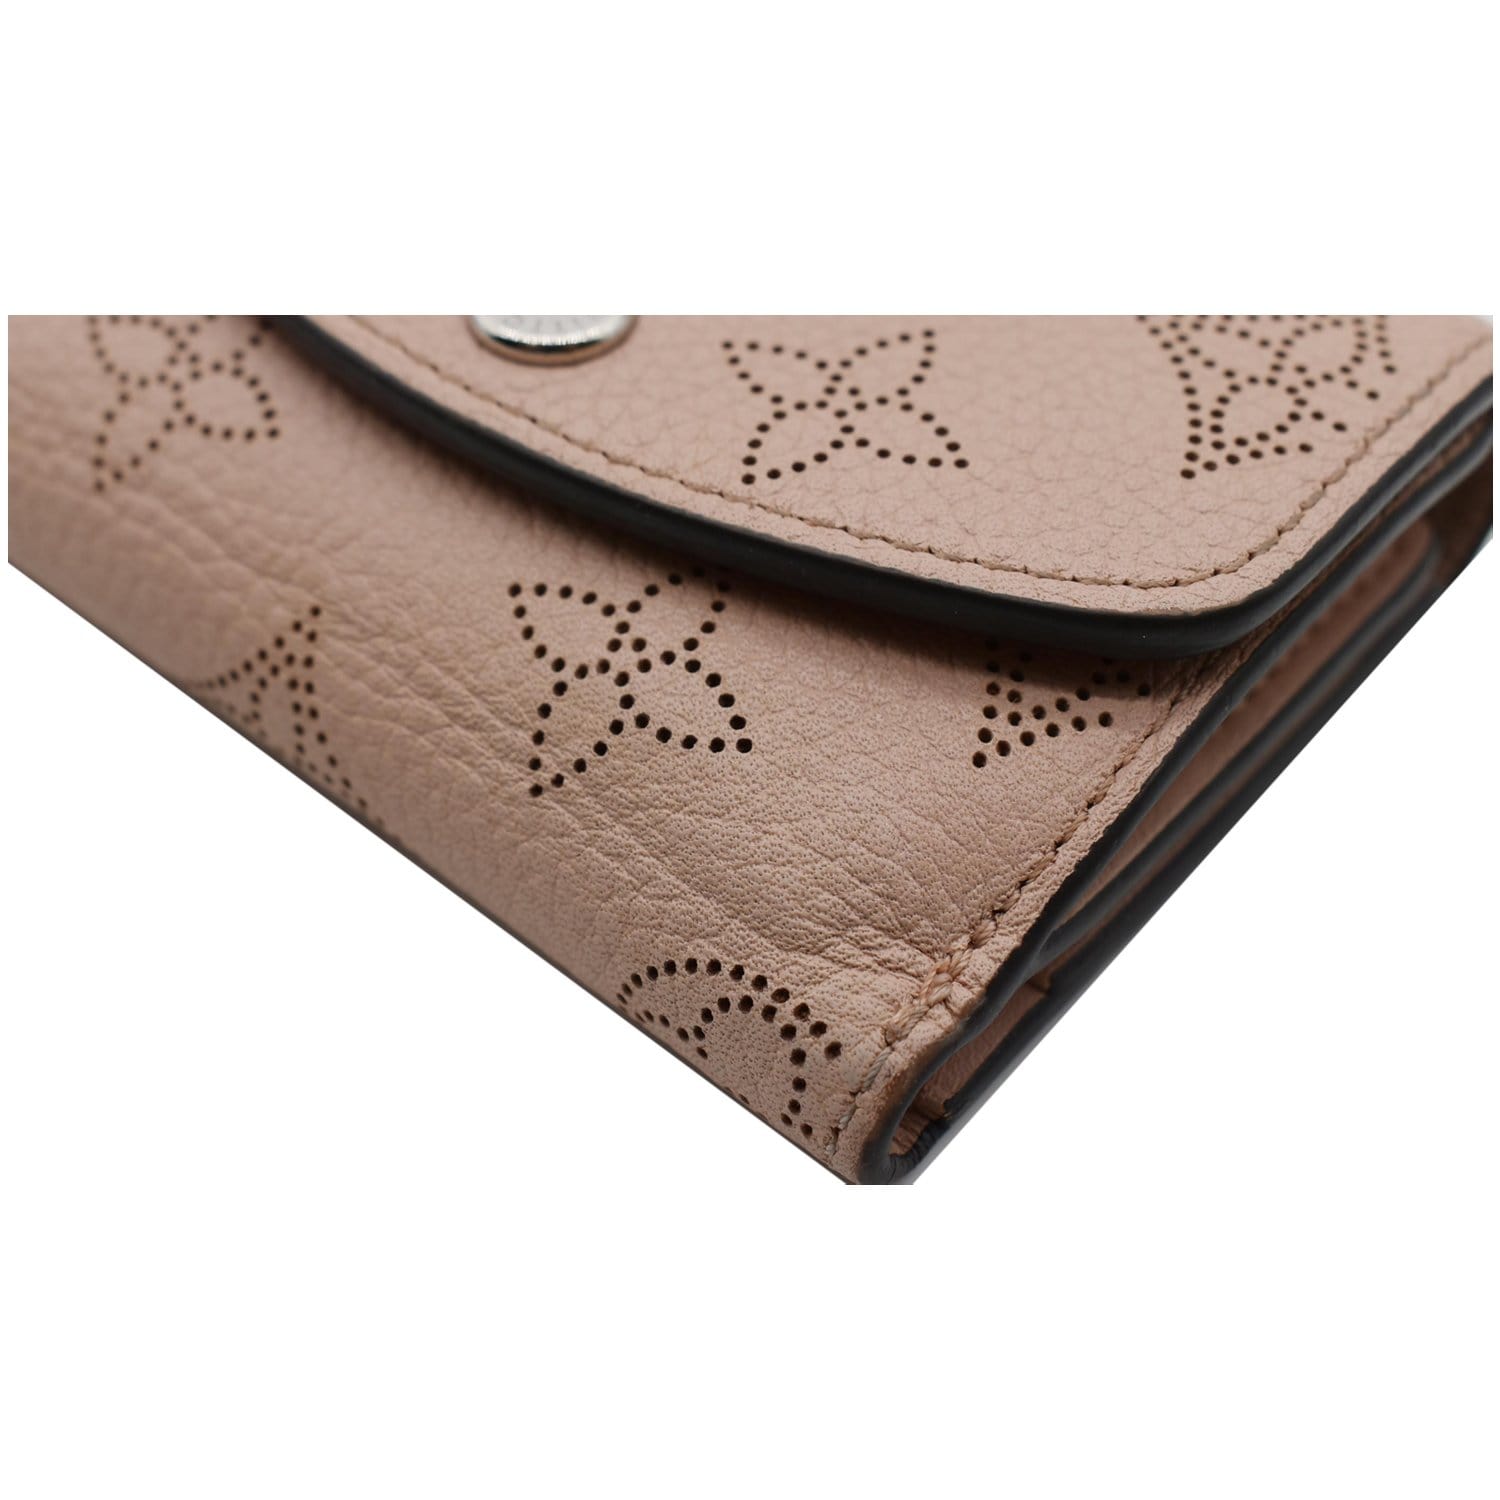 Louis Vuitton Compact Iris Wallet NM Mahina Leather Neutral 21186260